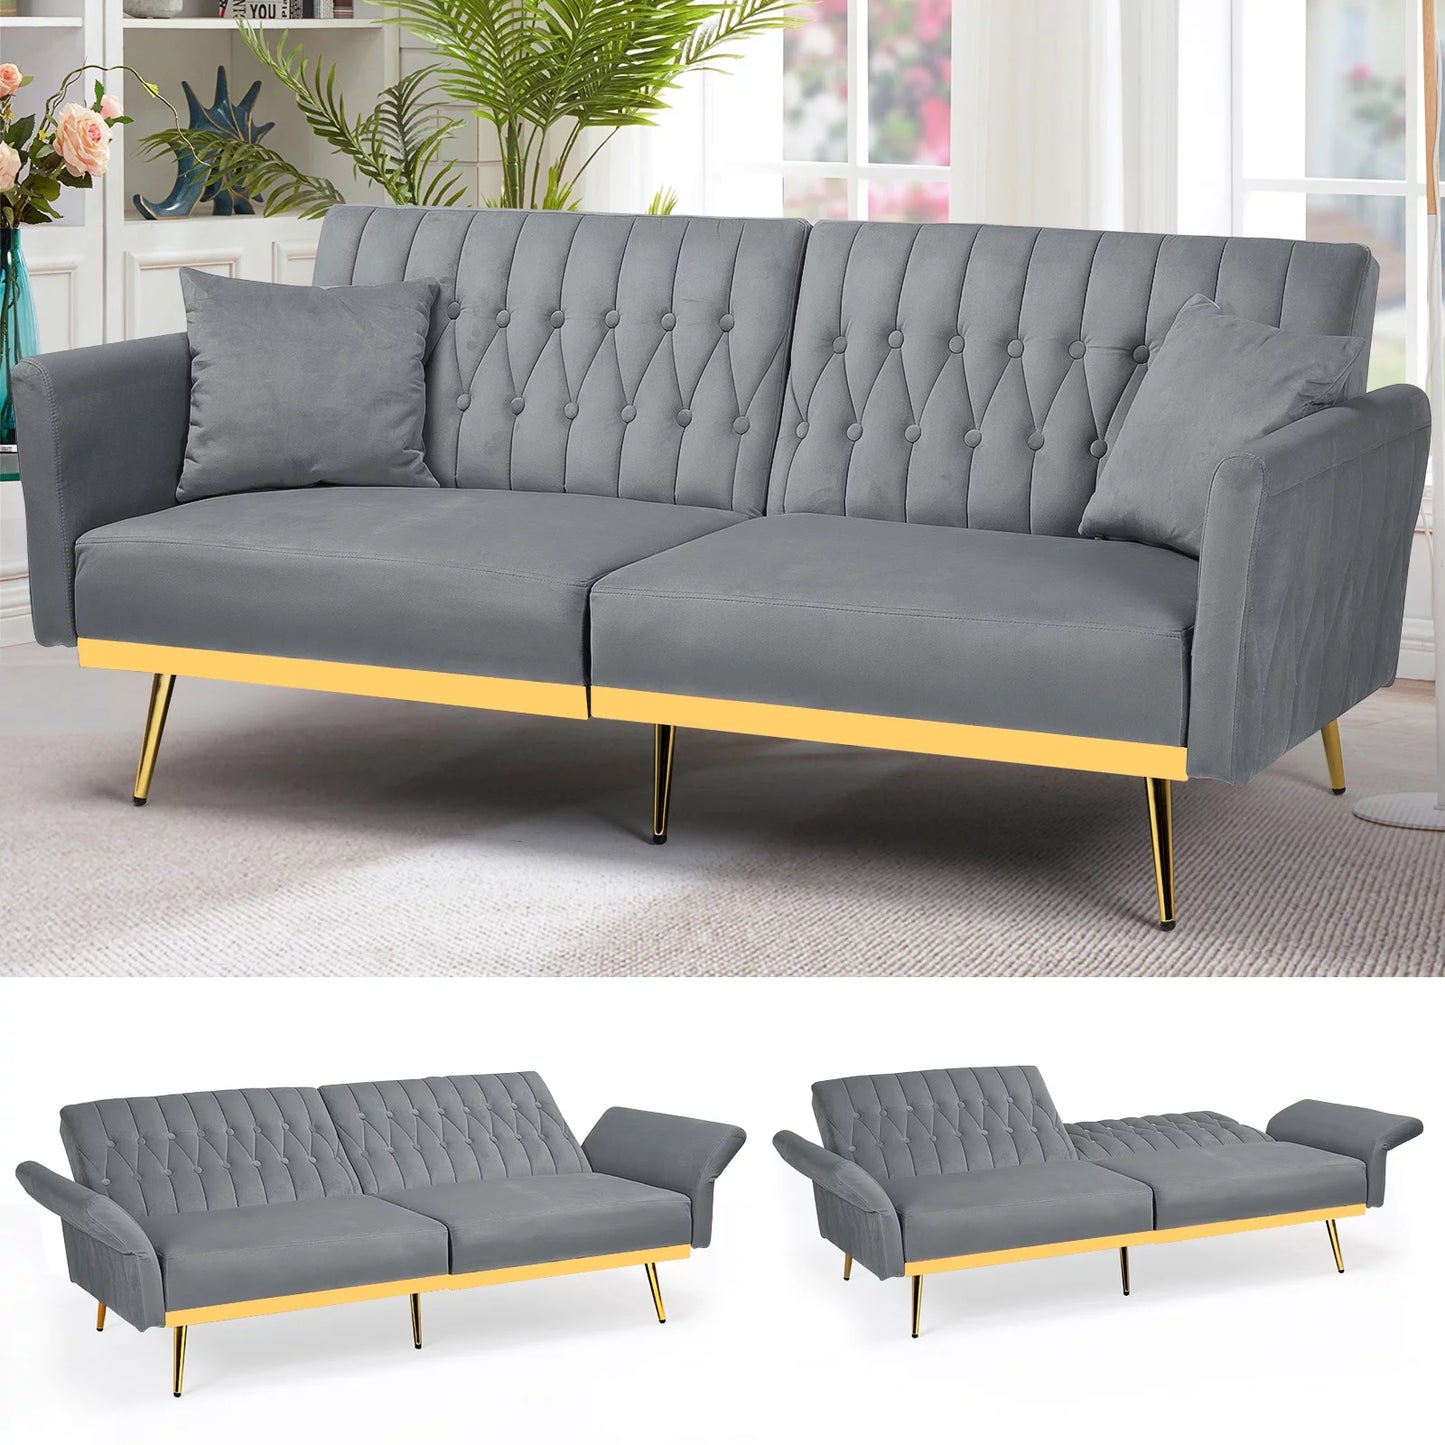 ACMEASE 70â?Velvet Futon Sofa Bed with Adjustable Armrests and 2 Pillows, Convertible Futon Couch, Ginger